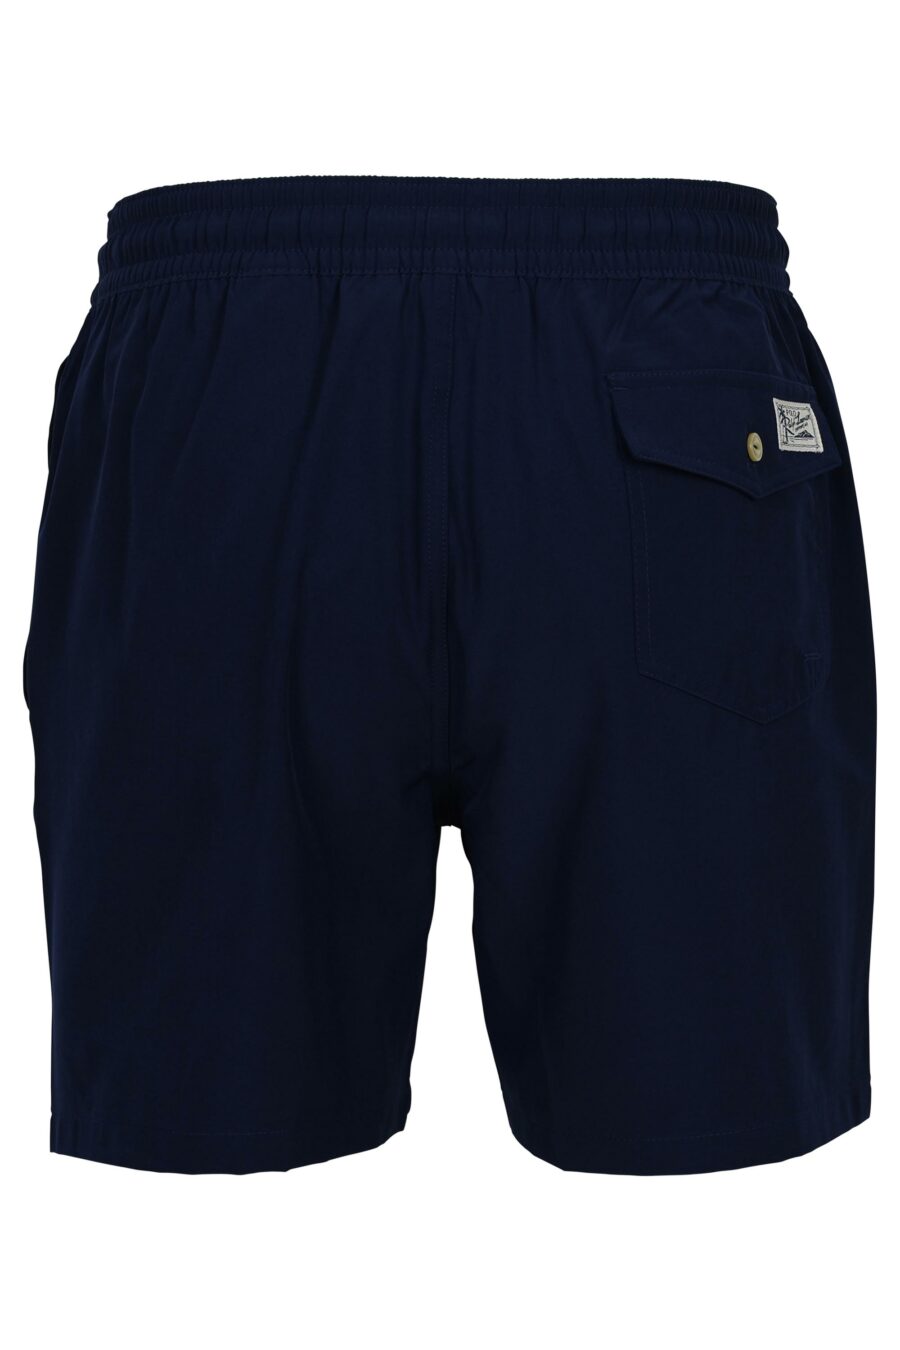 Dunkelblaue "Polo"-Shorts mit Minilogo - 3616851078616 2